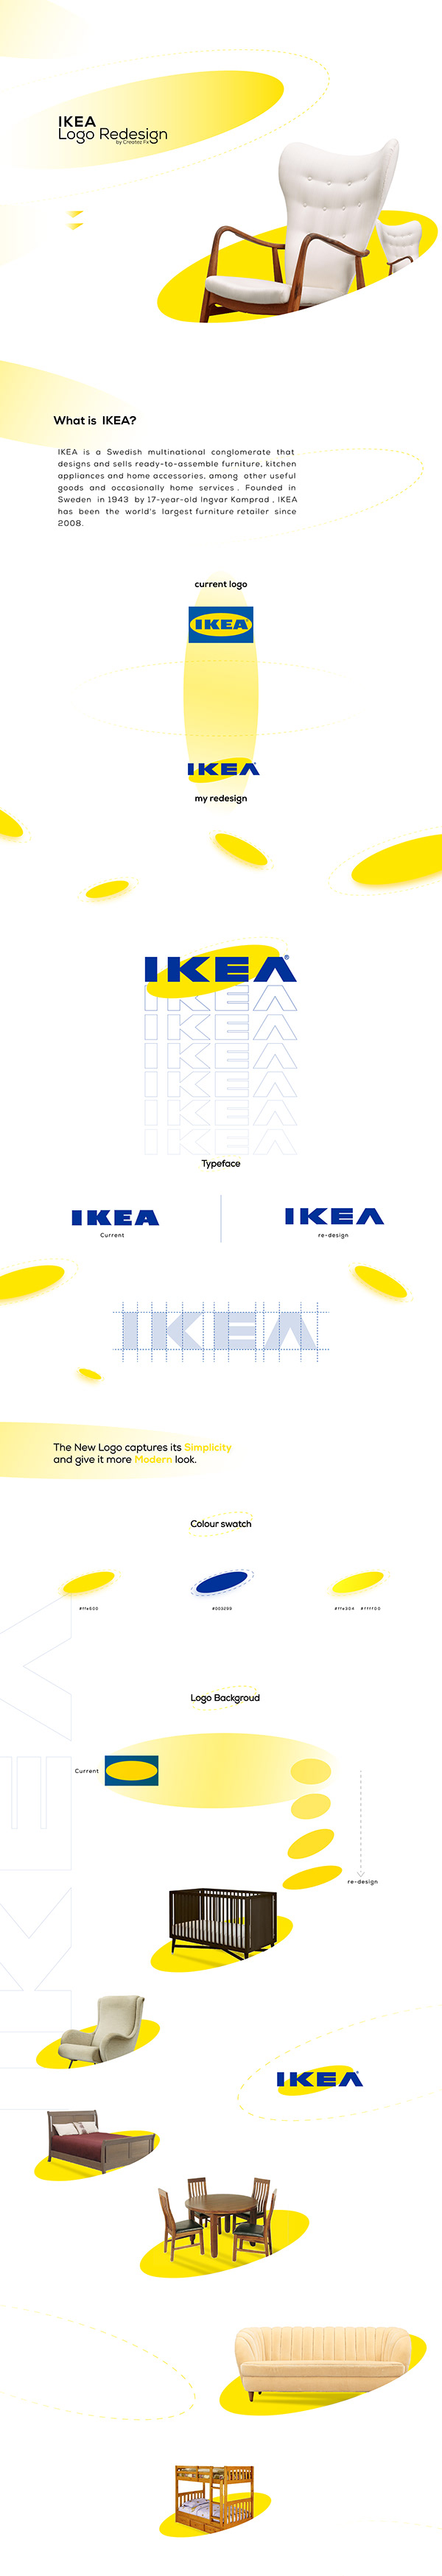 Ikea Logo Redesign